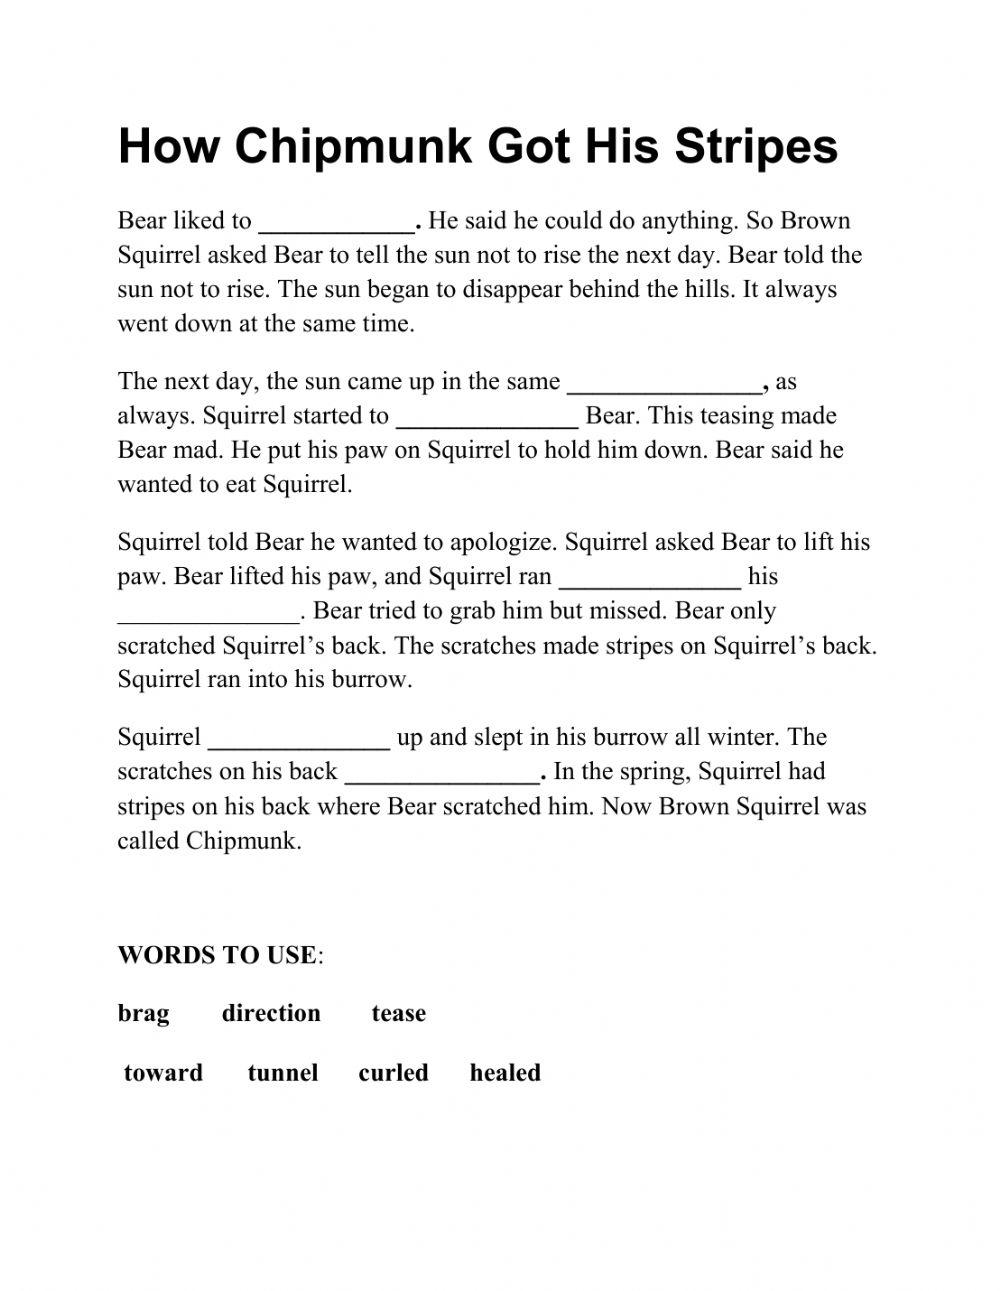 How Chipmunk got his Stripes